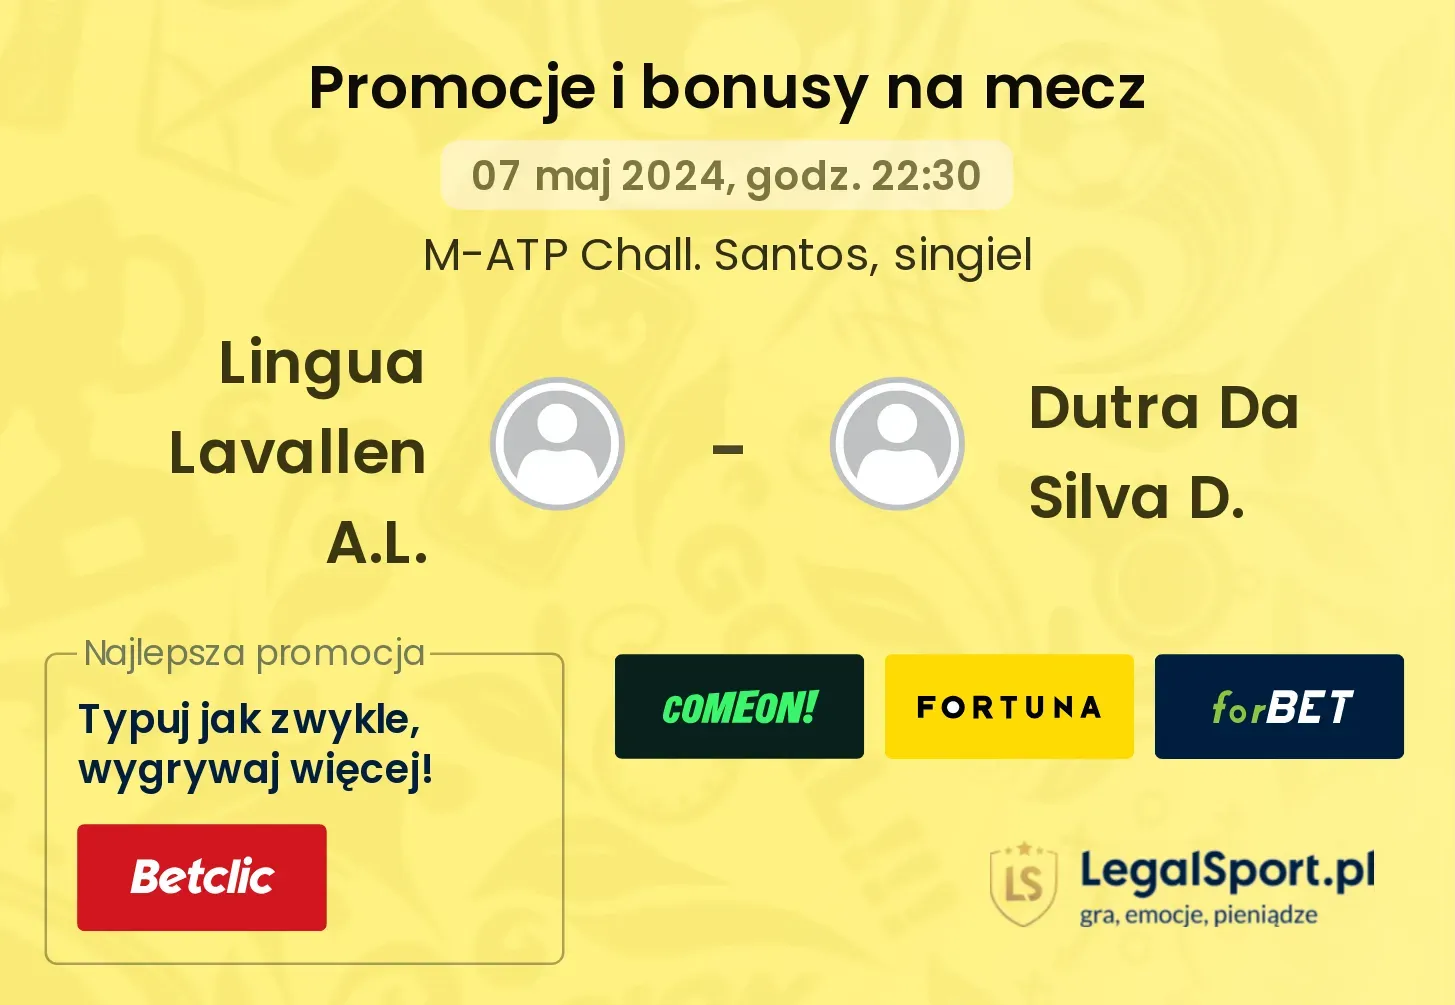 Lingua Lavallen A.L. - Dutra Da Silva D. promocje bonusy na mecz